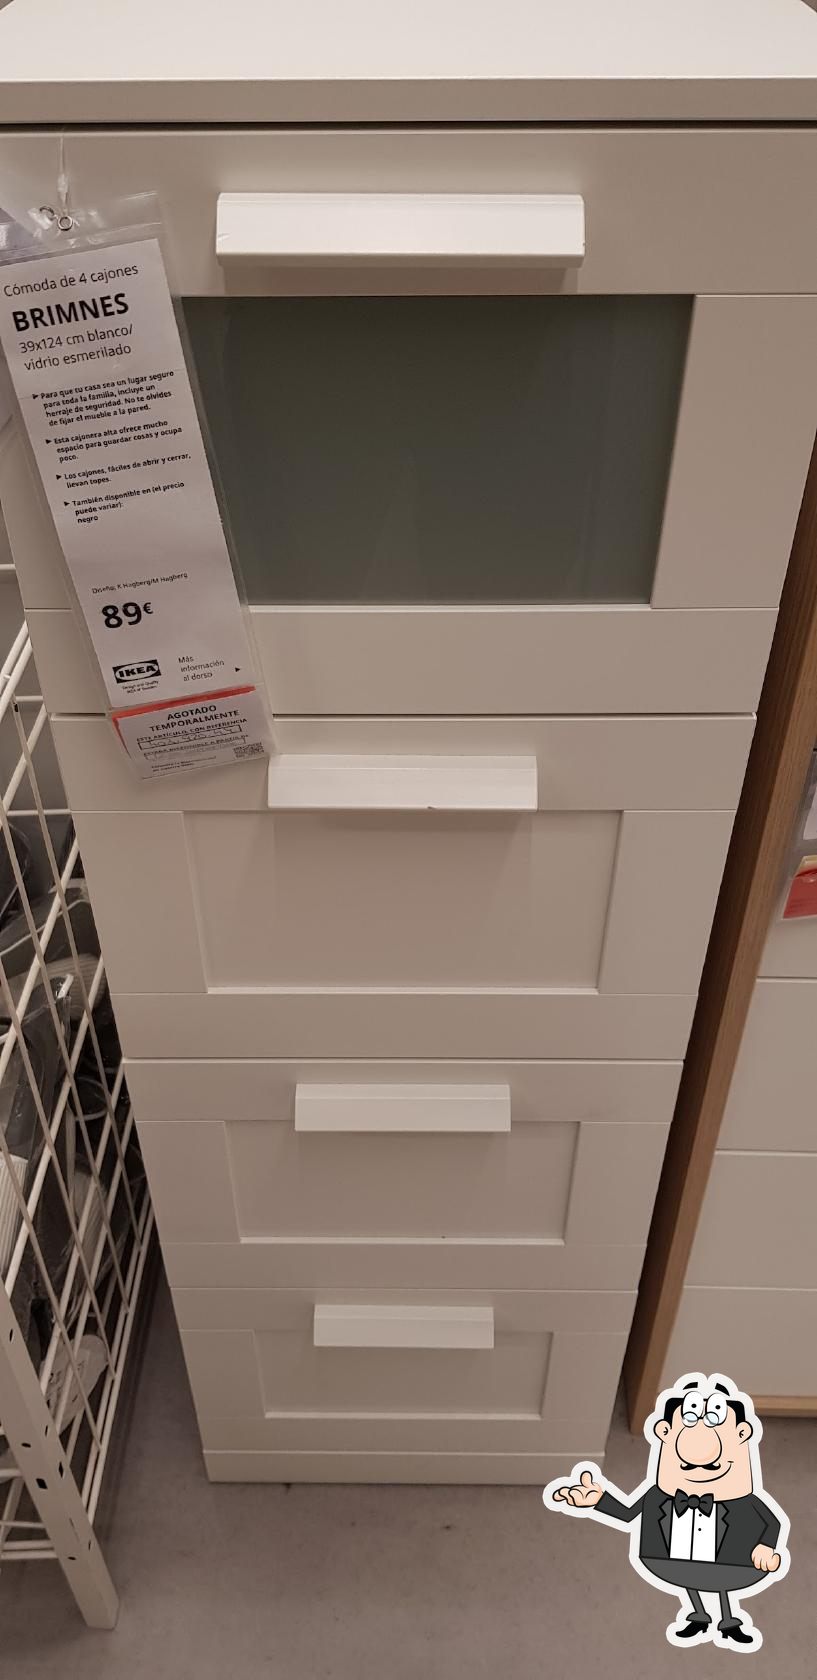 BRIMNES Cómoda de 4 cajones, blanco, vidrio esmerilado, 39x124 cm - IKEA